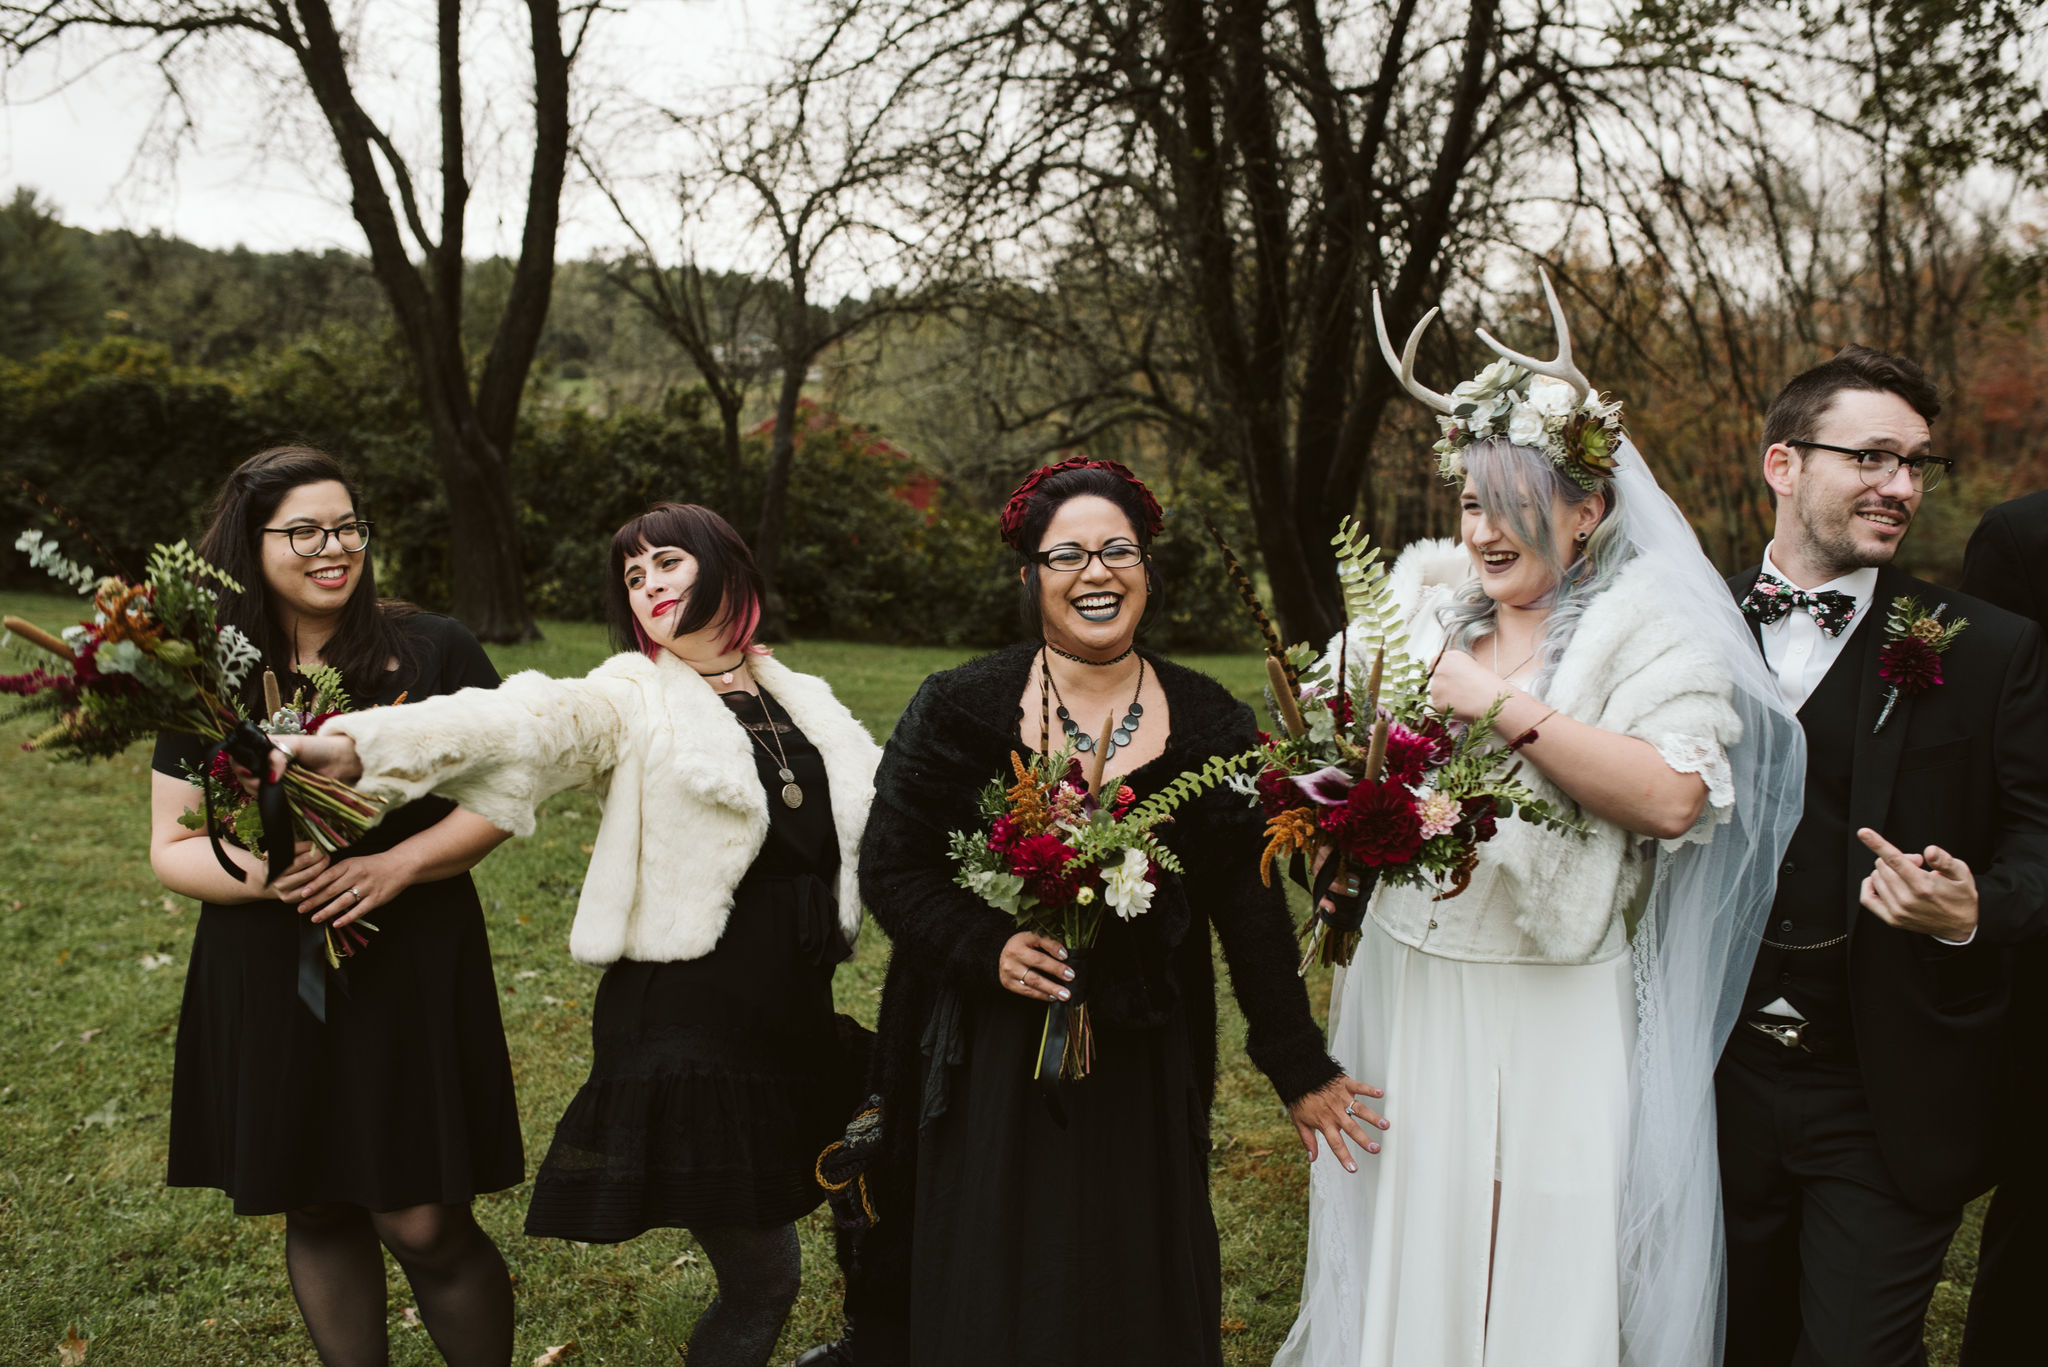  Maryland, Baltimore Wedding Photographer, Backyard Wedding, Fall, October, Dark Bohemian, Whimsical, Fun, Silly Portrait of Bride and Groom and Bridesmaids 